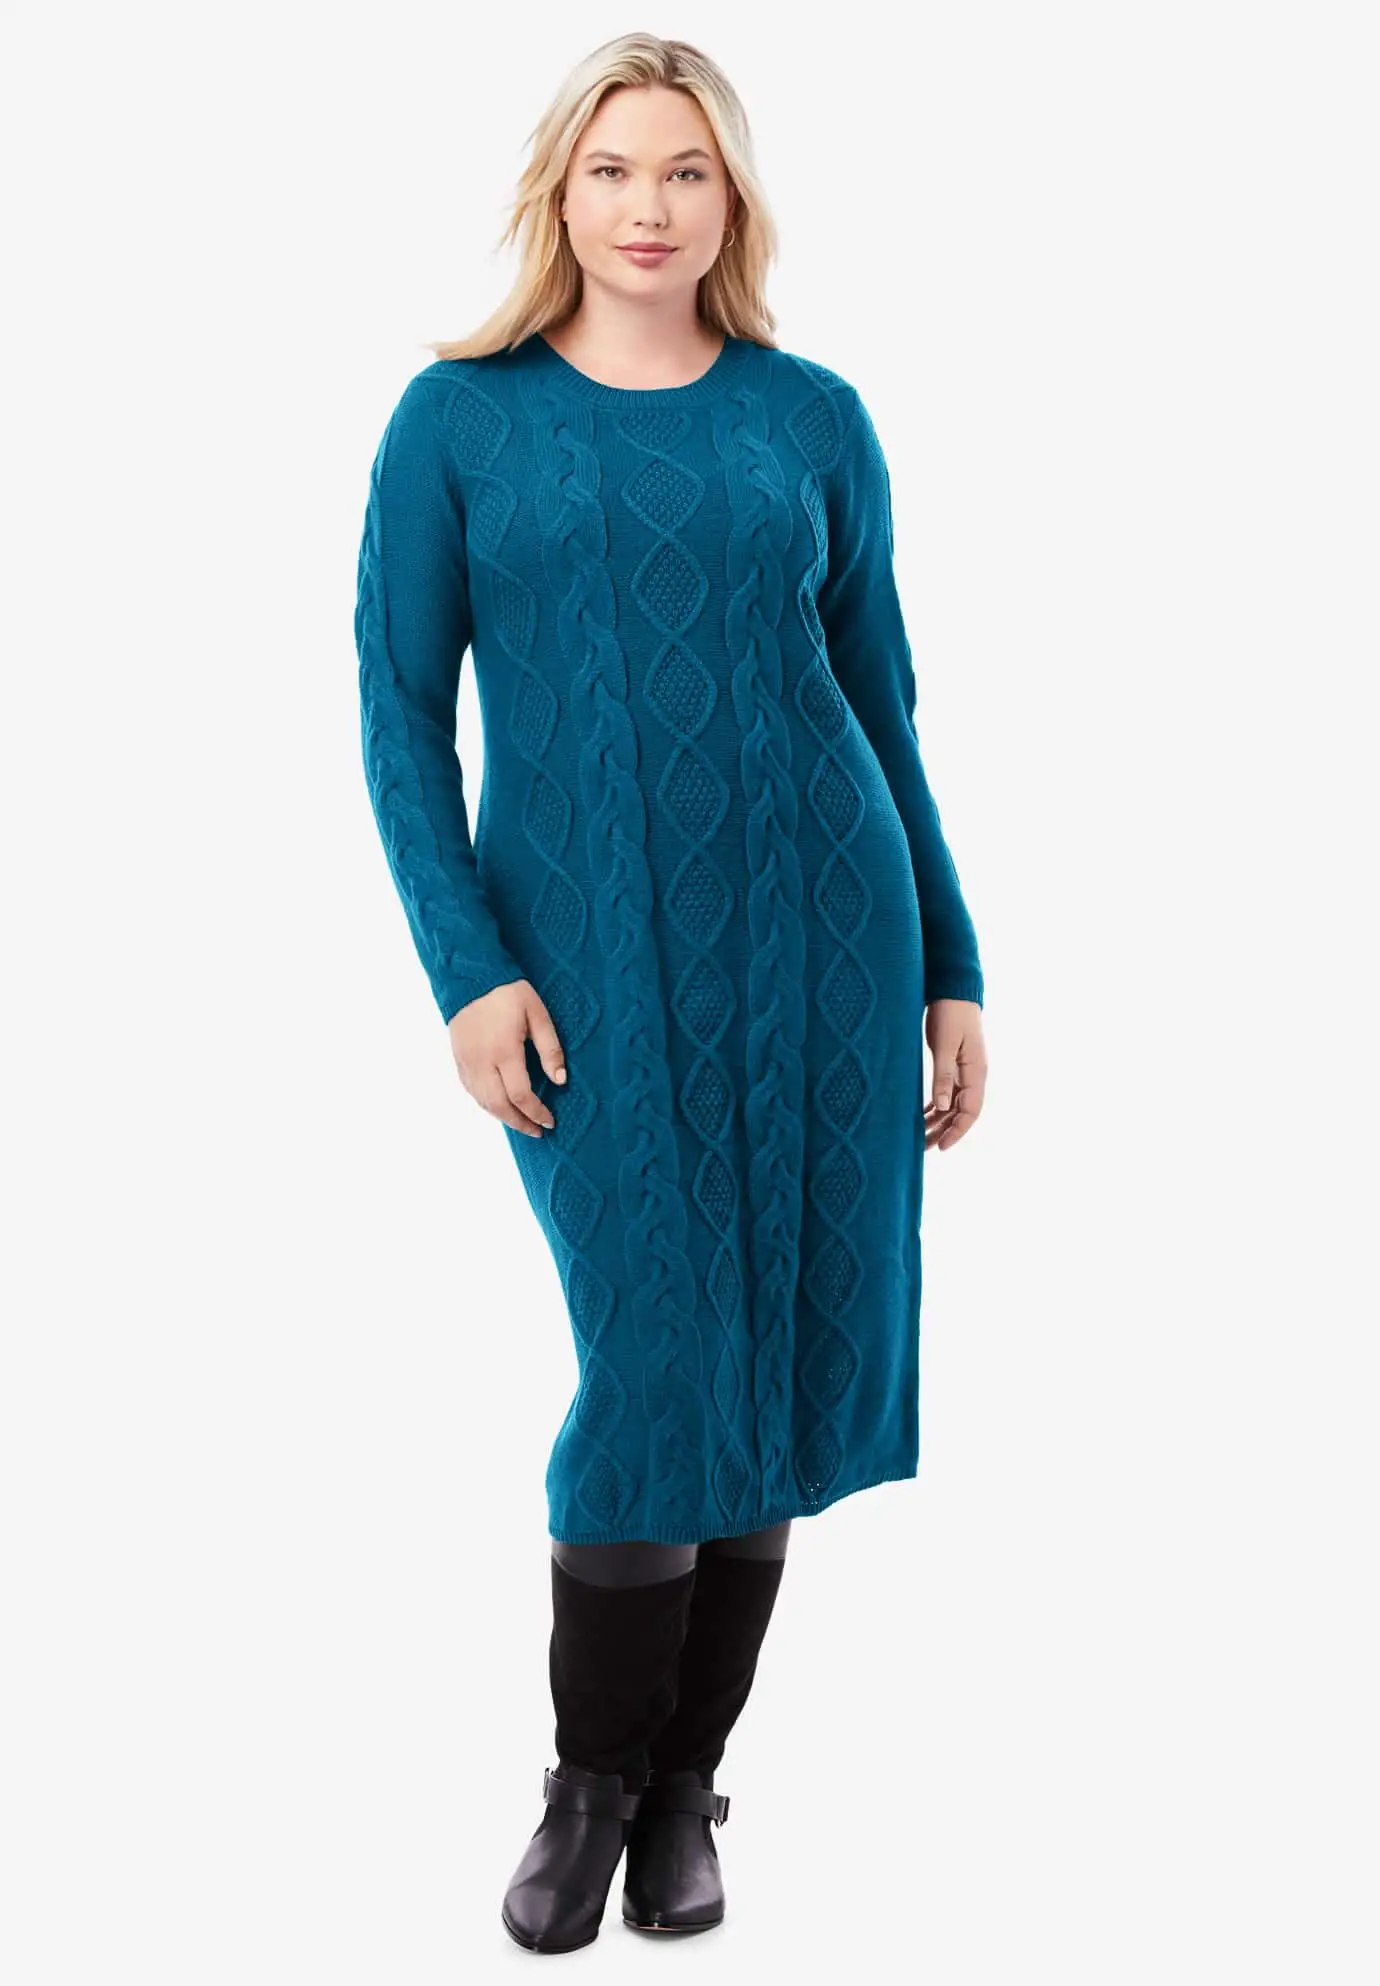 Plus Size Sweater Dress 02